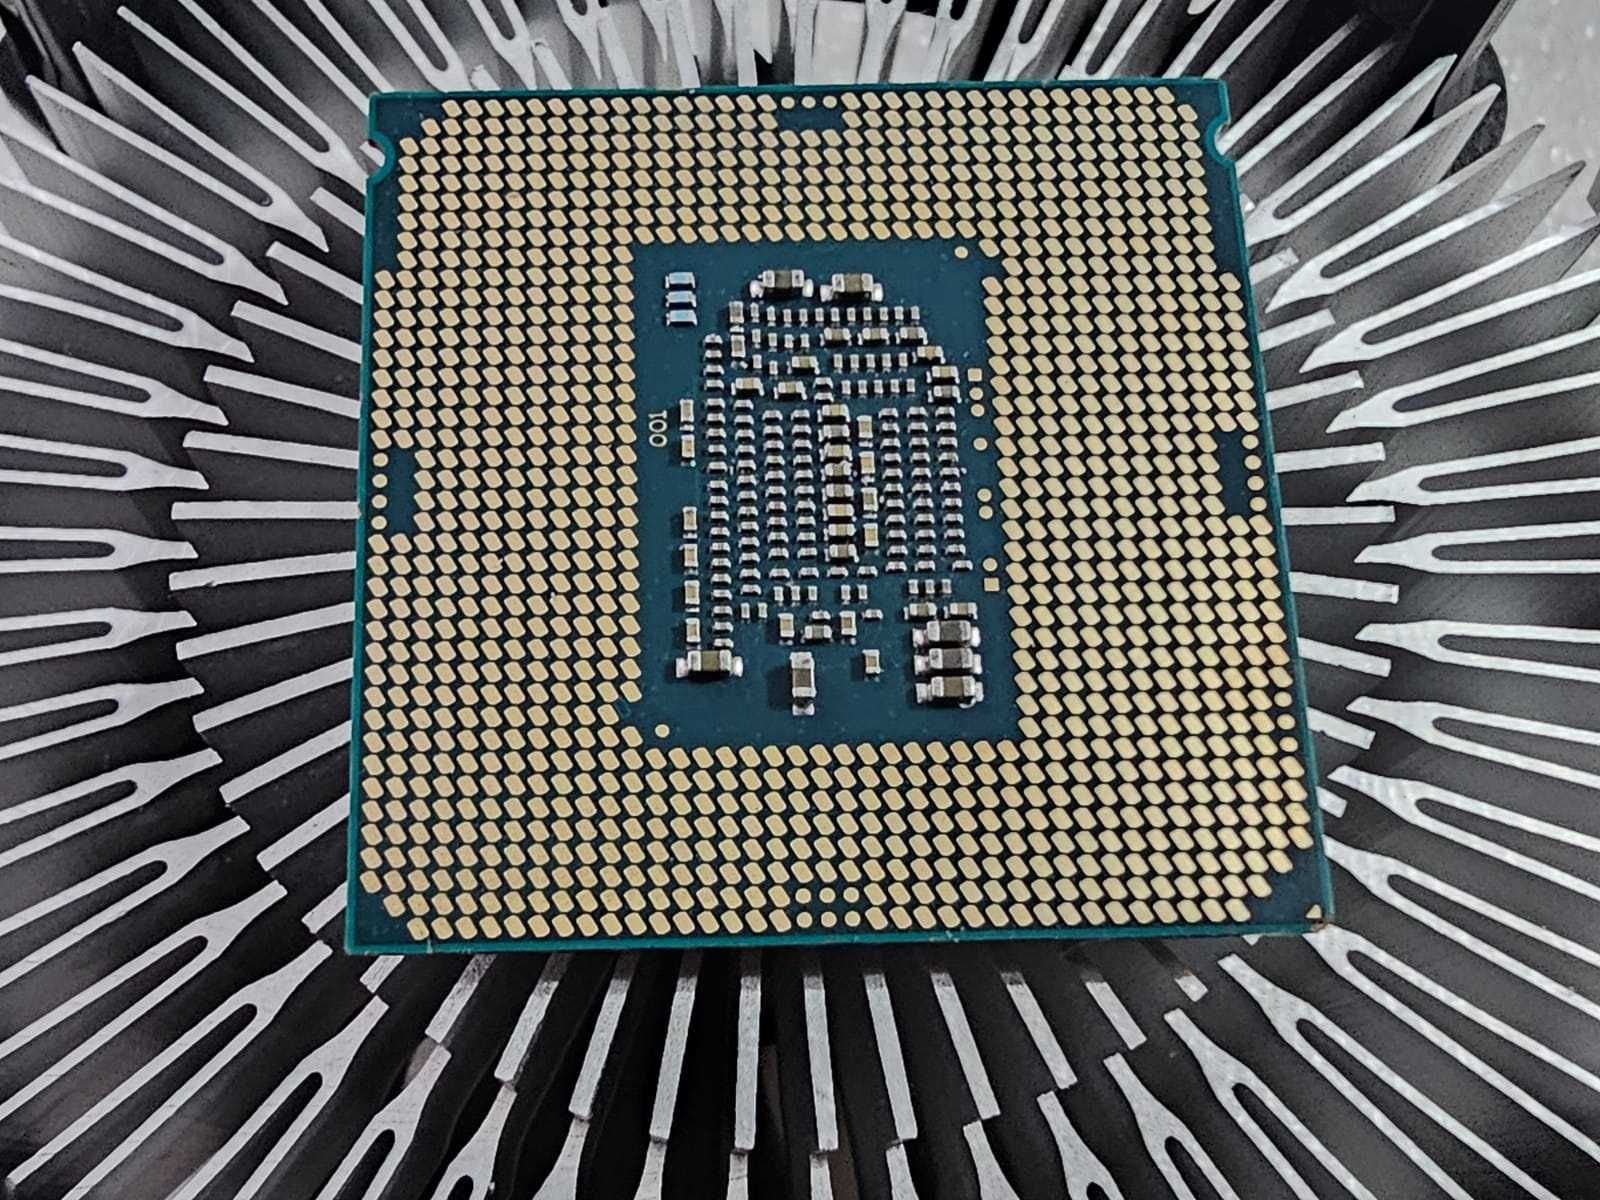 Procesor Intel Core I5-6500, 3.2GHz, Skylake-S, 6MB, Socket 1151